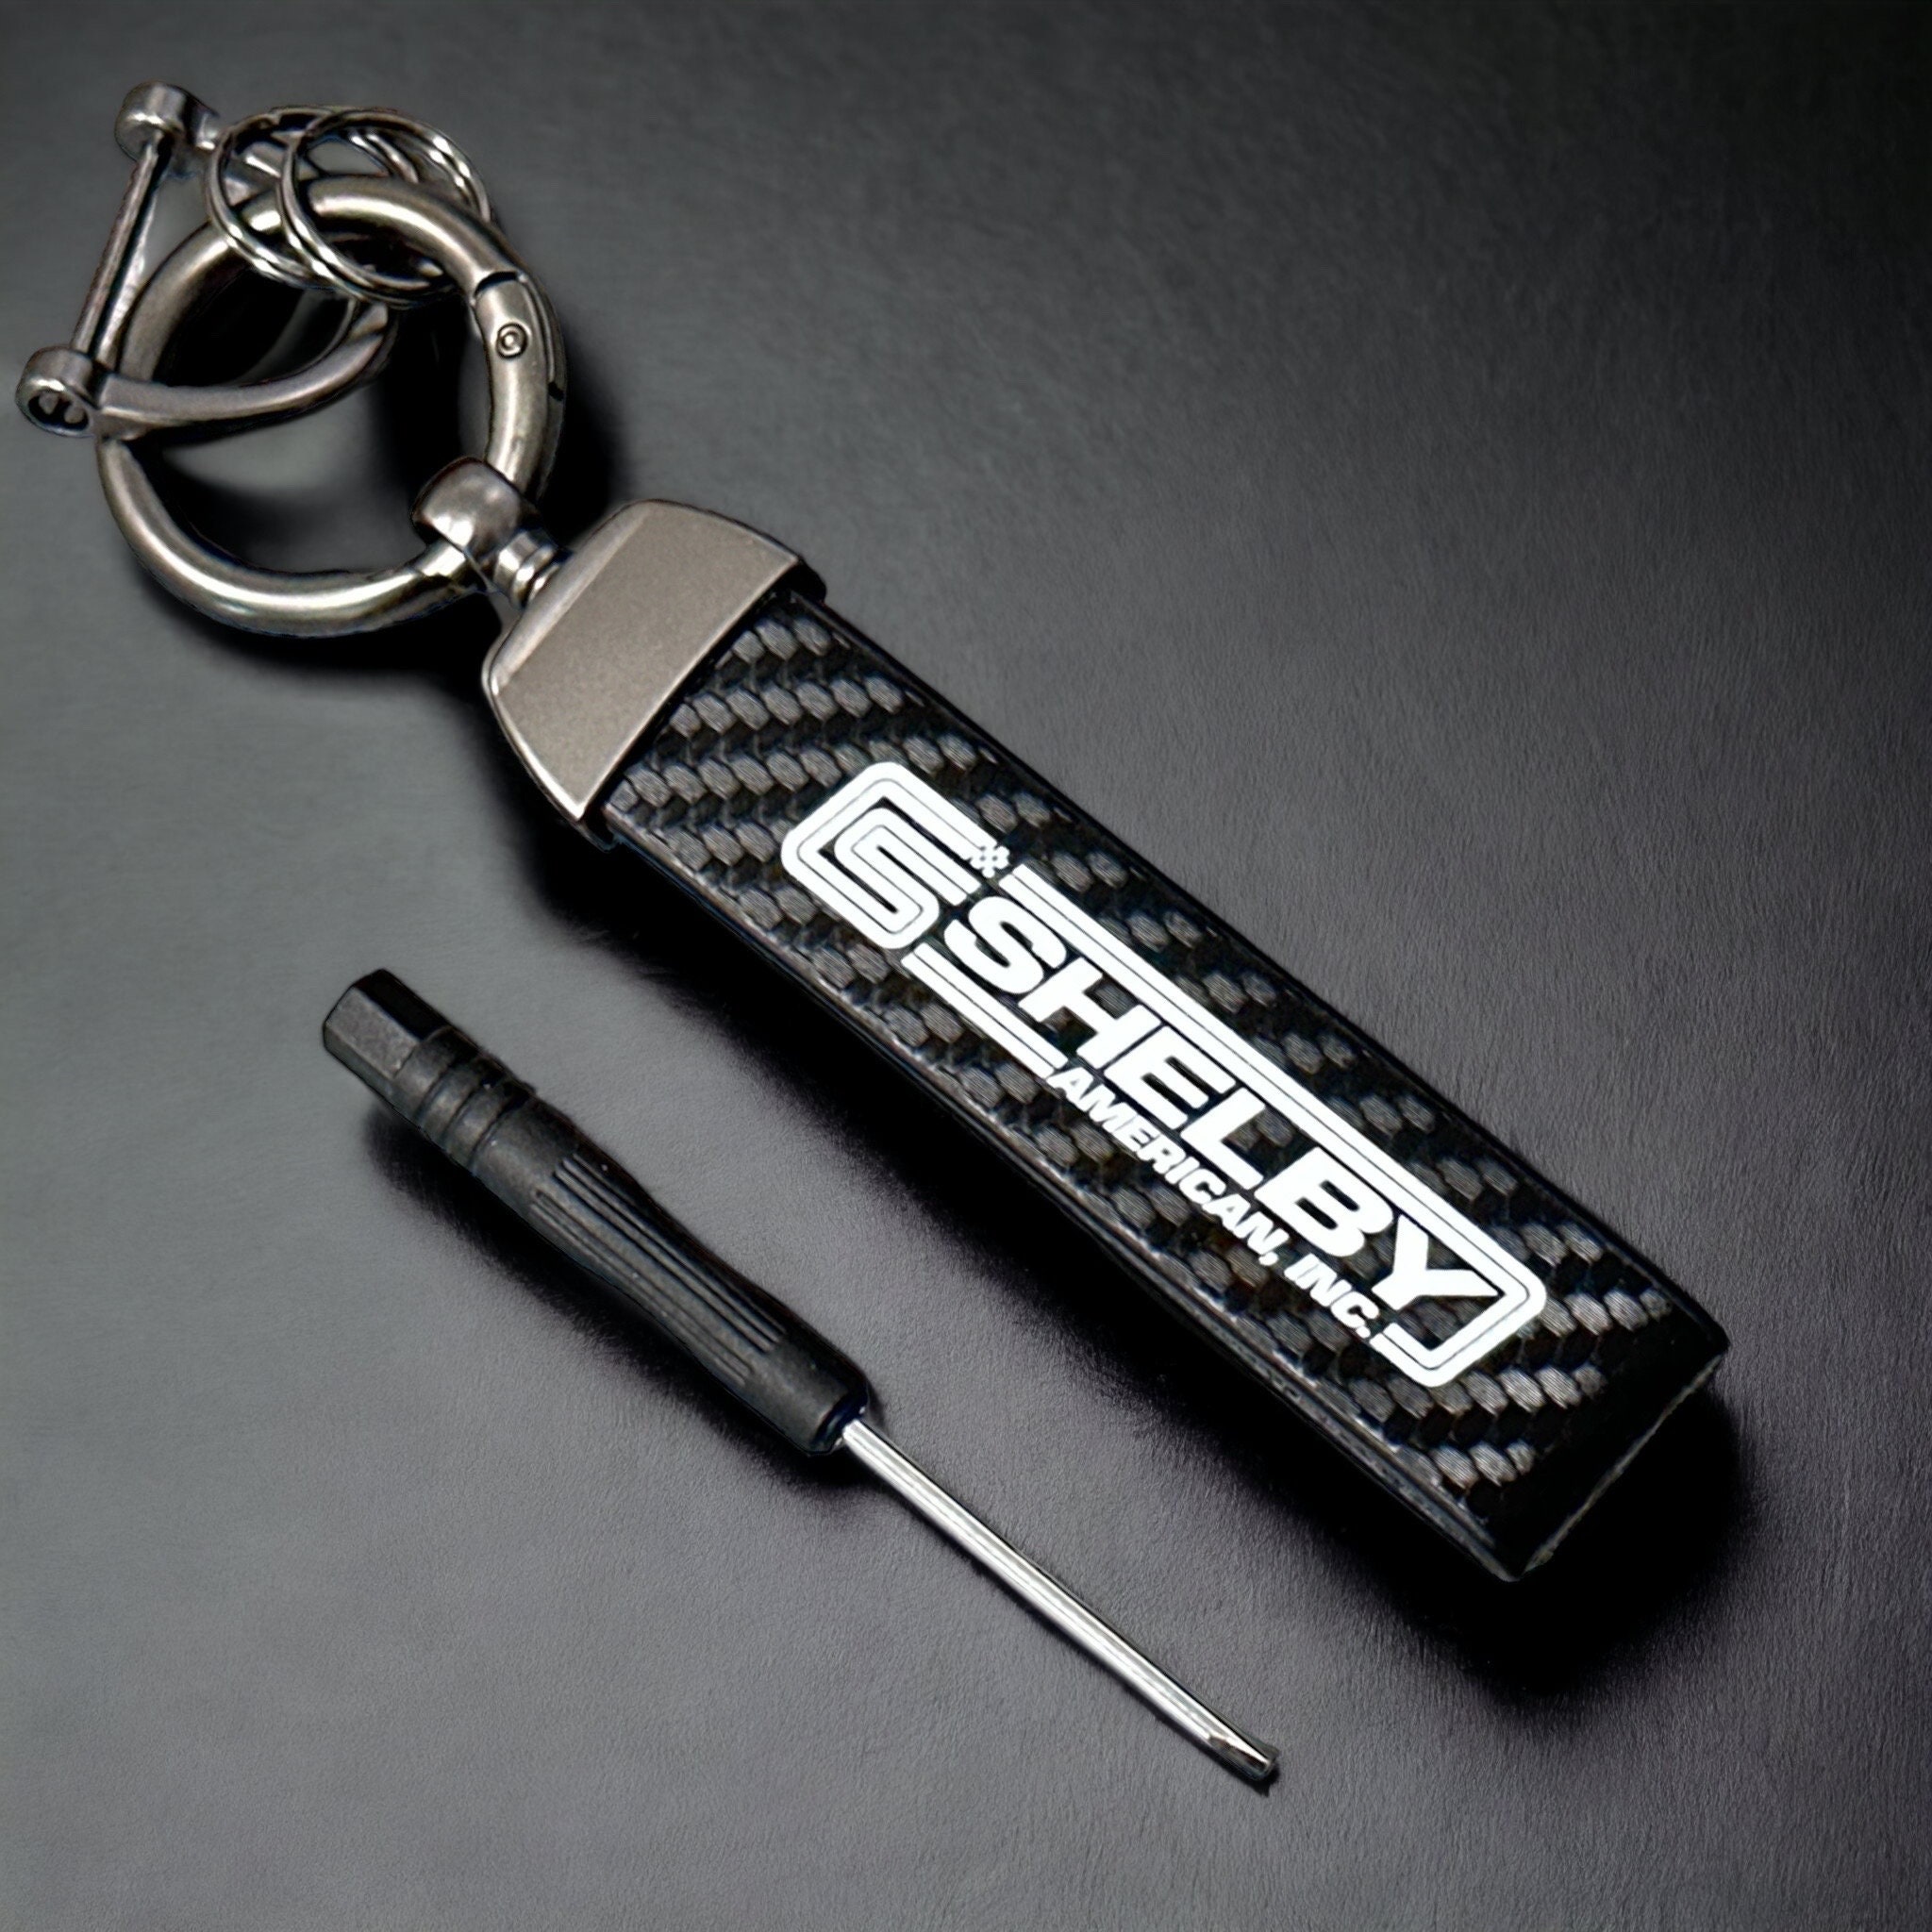 Shelby Keychain With AC Cobra Logo, Black Die-Cut